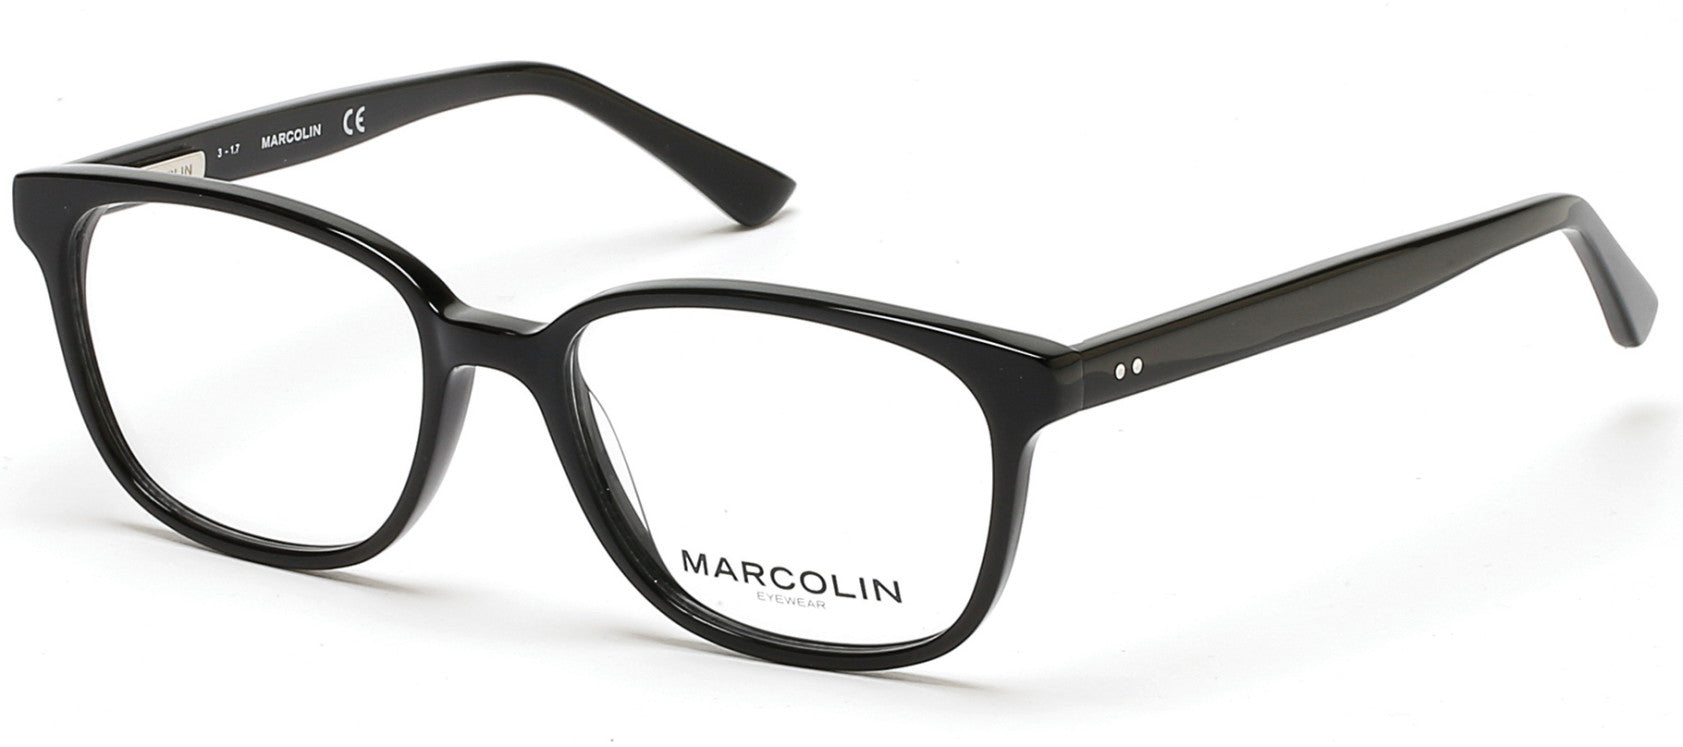 Marcolin MA3007 Eyeglasses 001-001 - Shiny Black